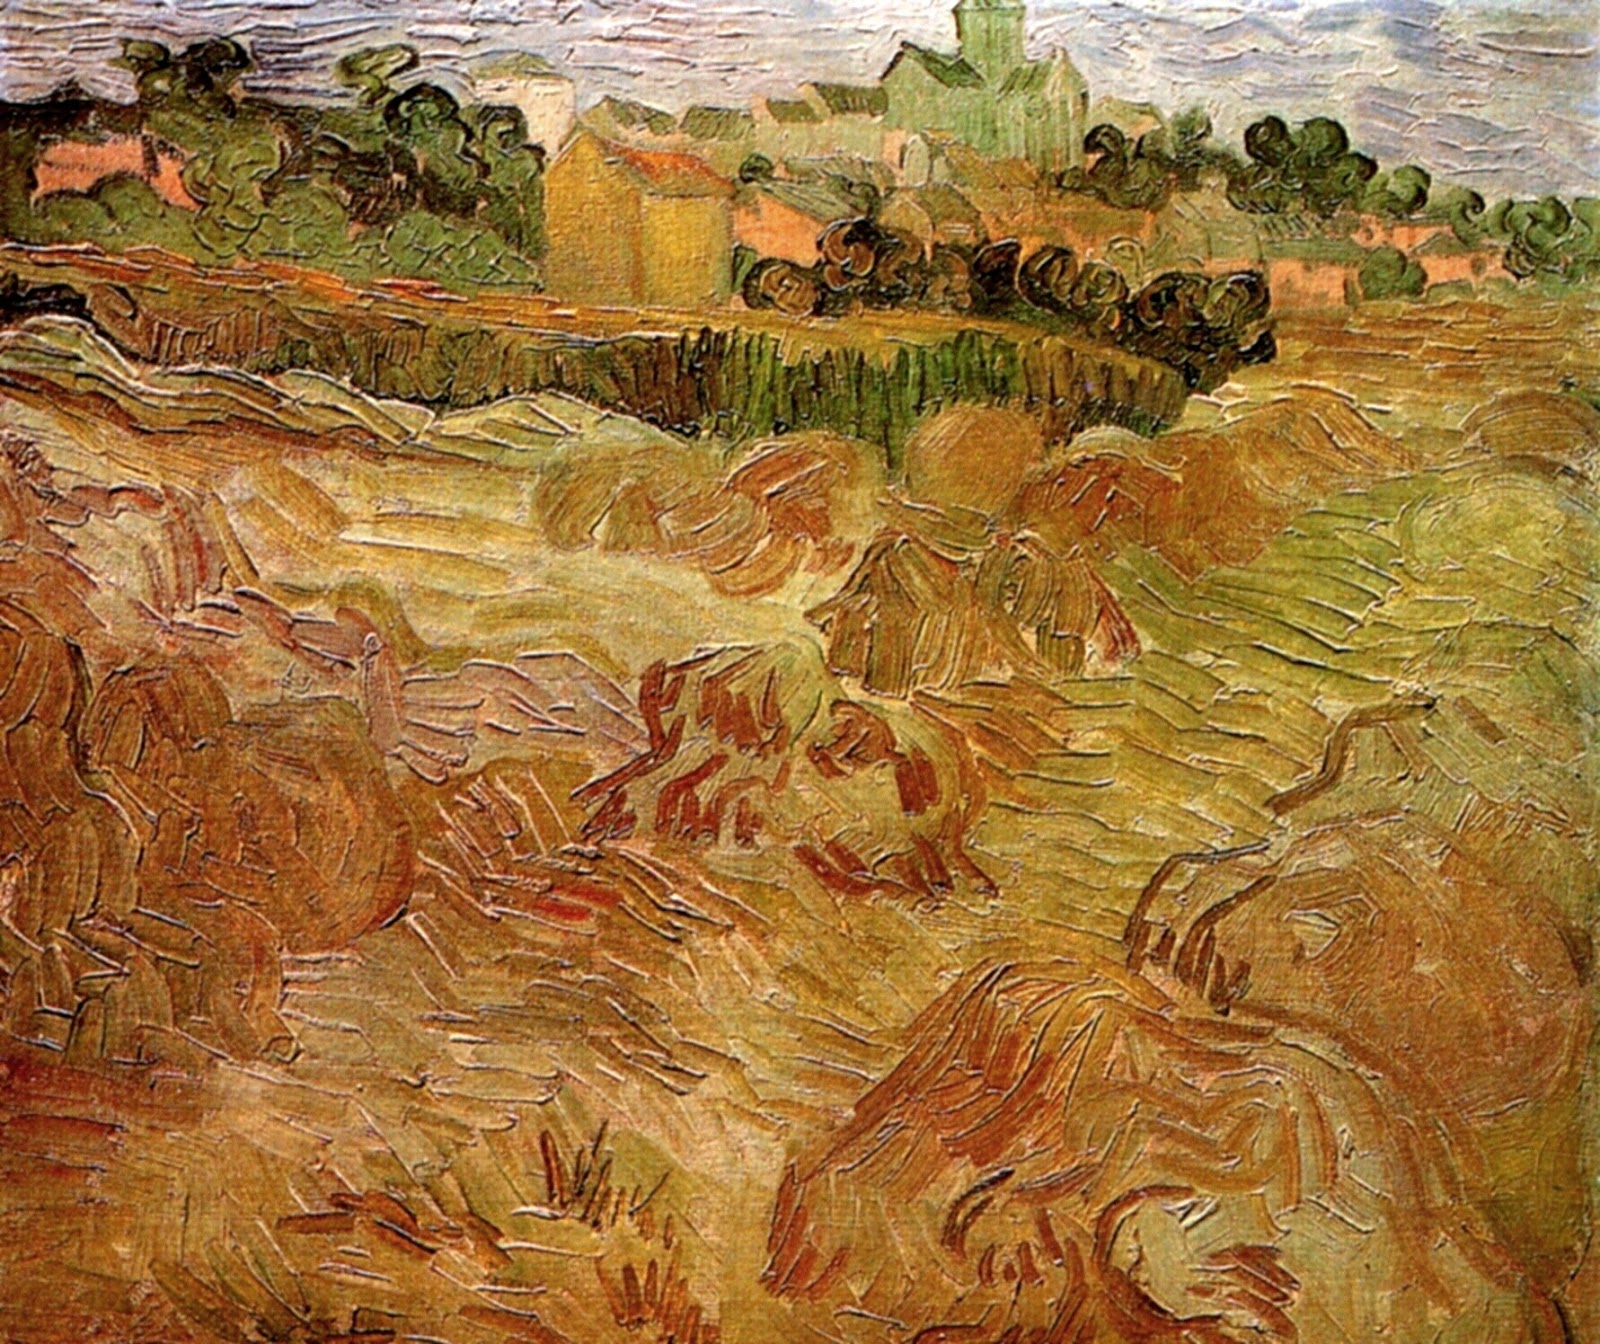 Vincent+Van+Gogh-1853-1890 (836).jpg